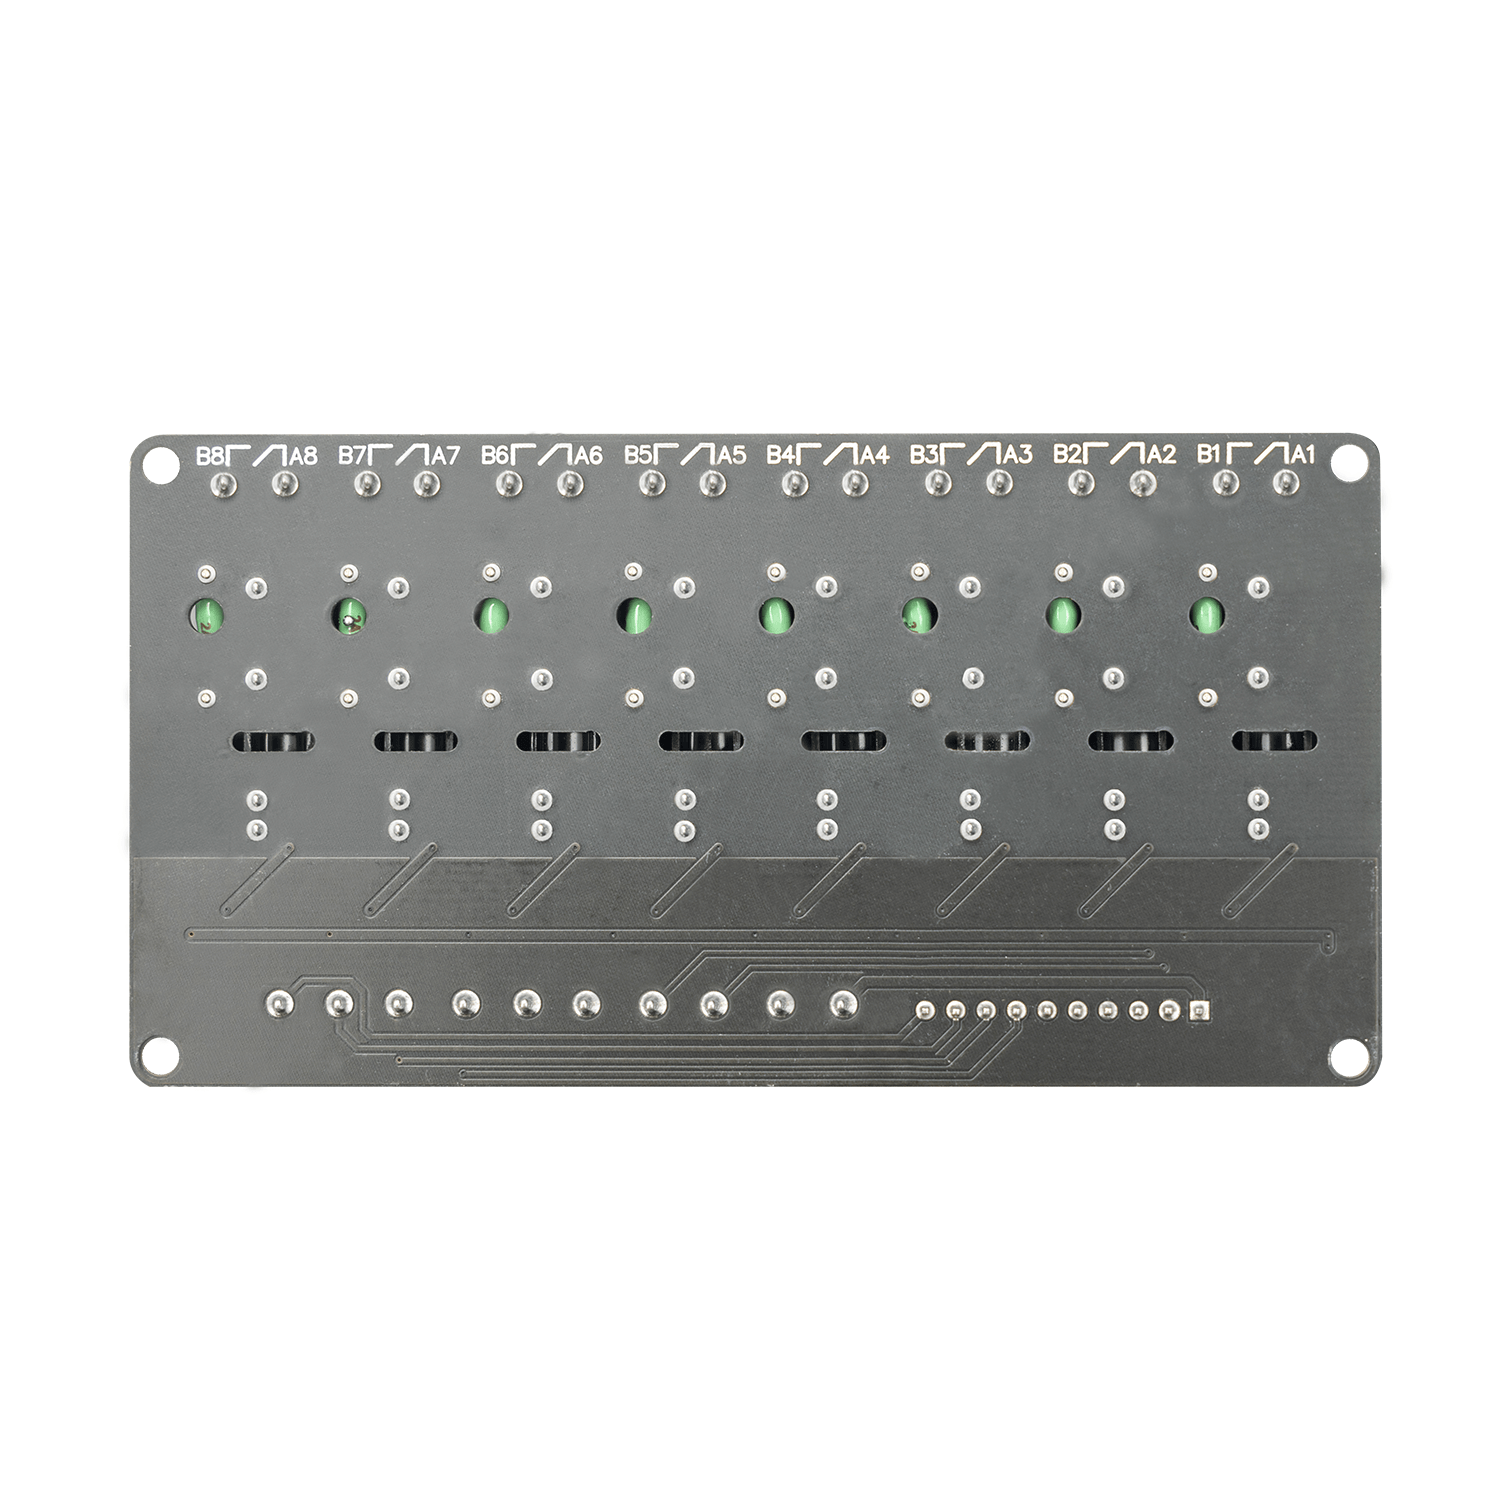 8 Kanal Solid State Relais 5V DC Low Level Trigger Power Switch kompatibel mit Arduino und Raspberry Pi